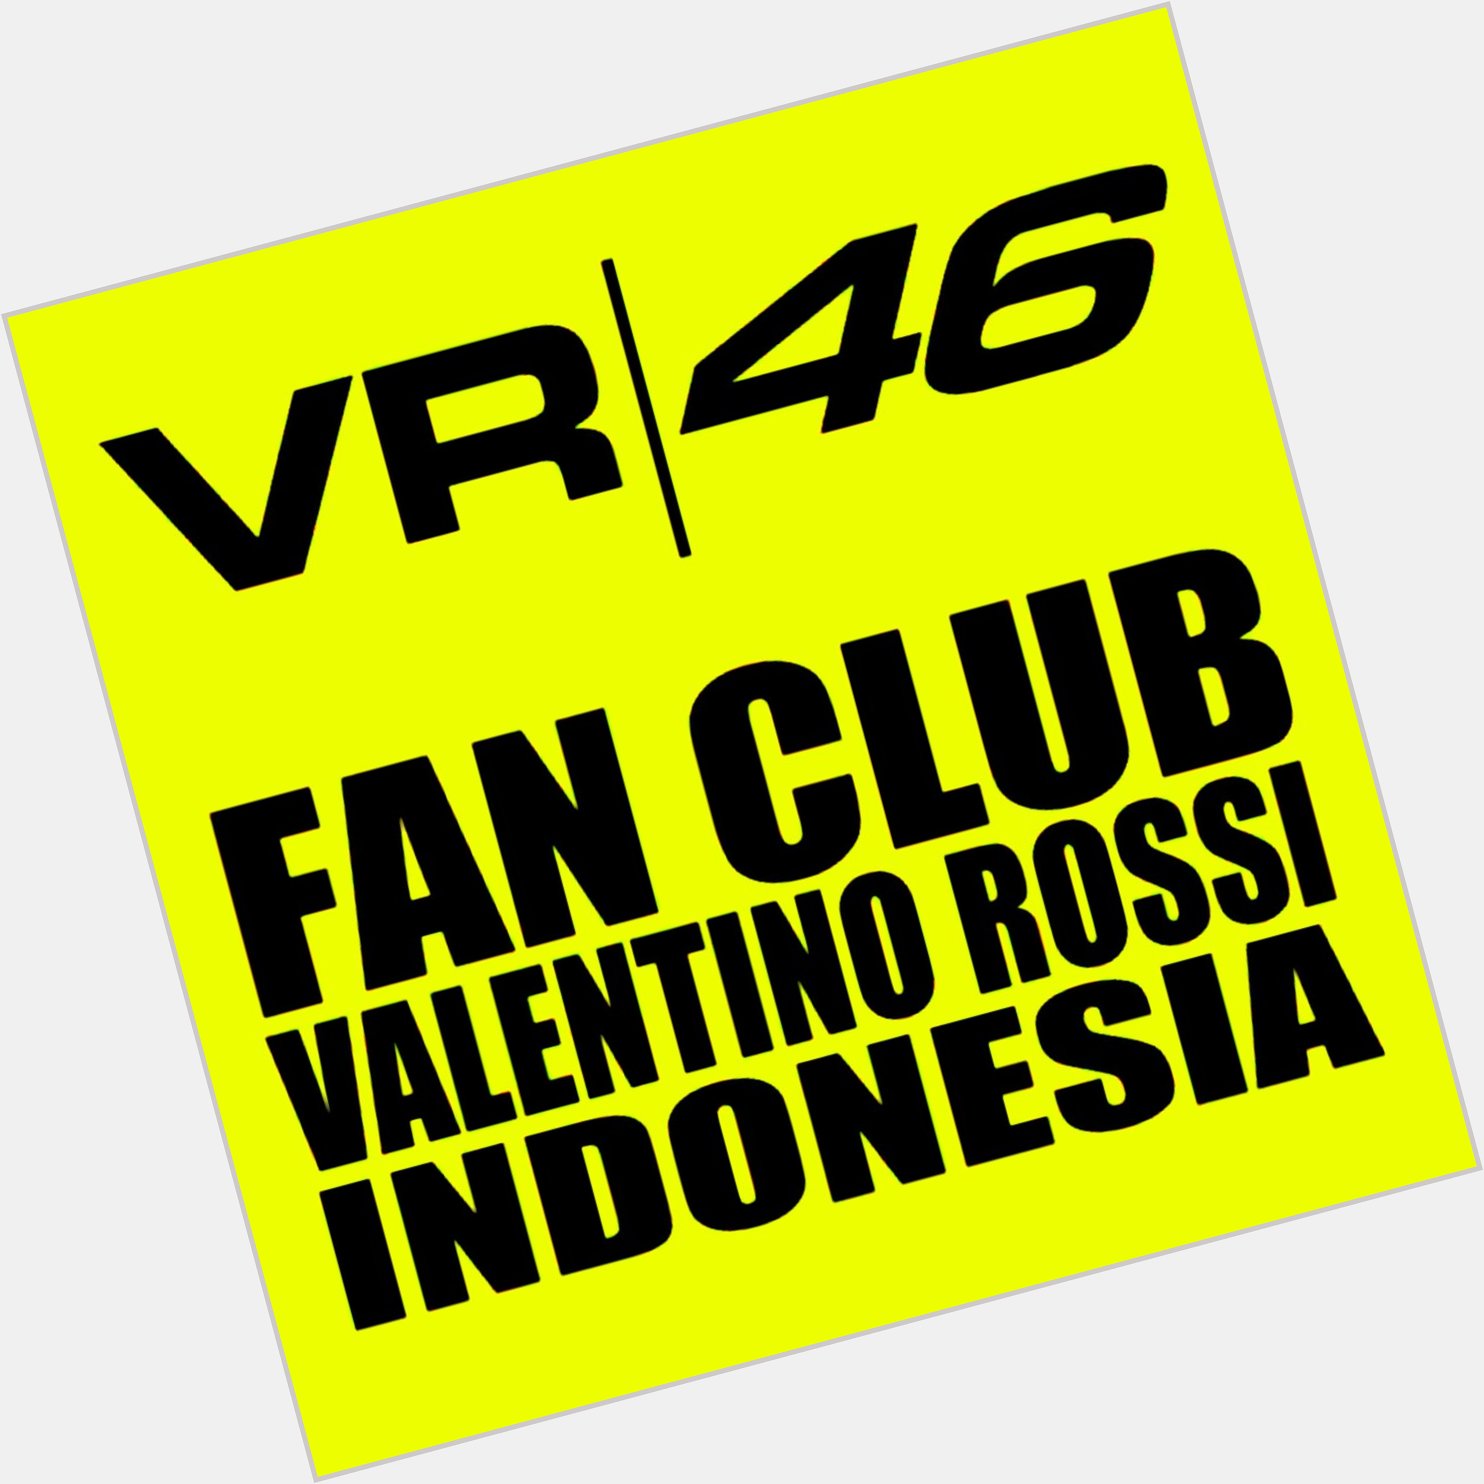 Happy Birthday Fan Club Valentino Rossi Indonesia (FCVRI) .. selalu kompak.. proud to be a part of you 